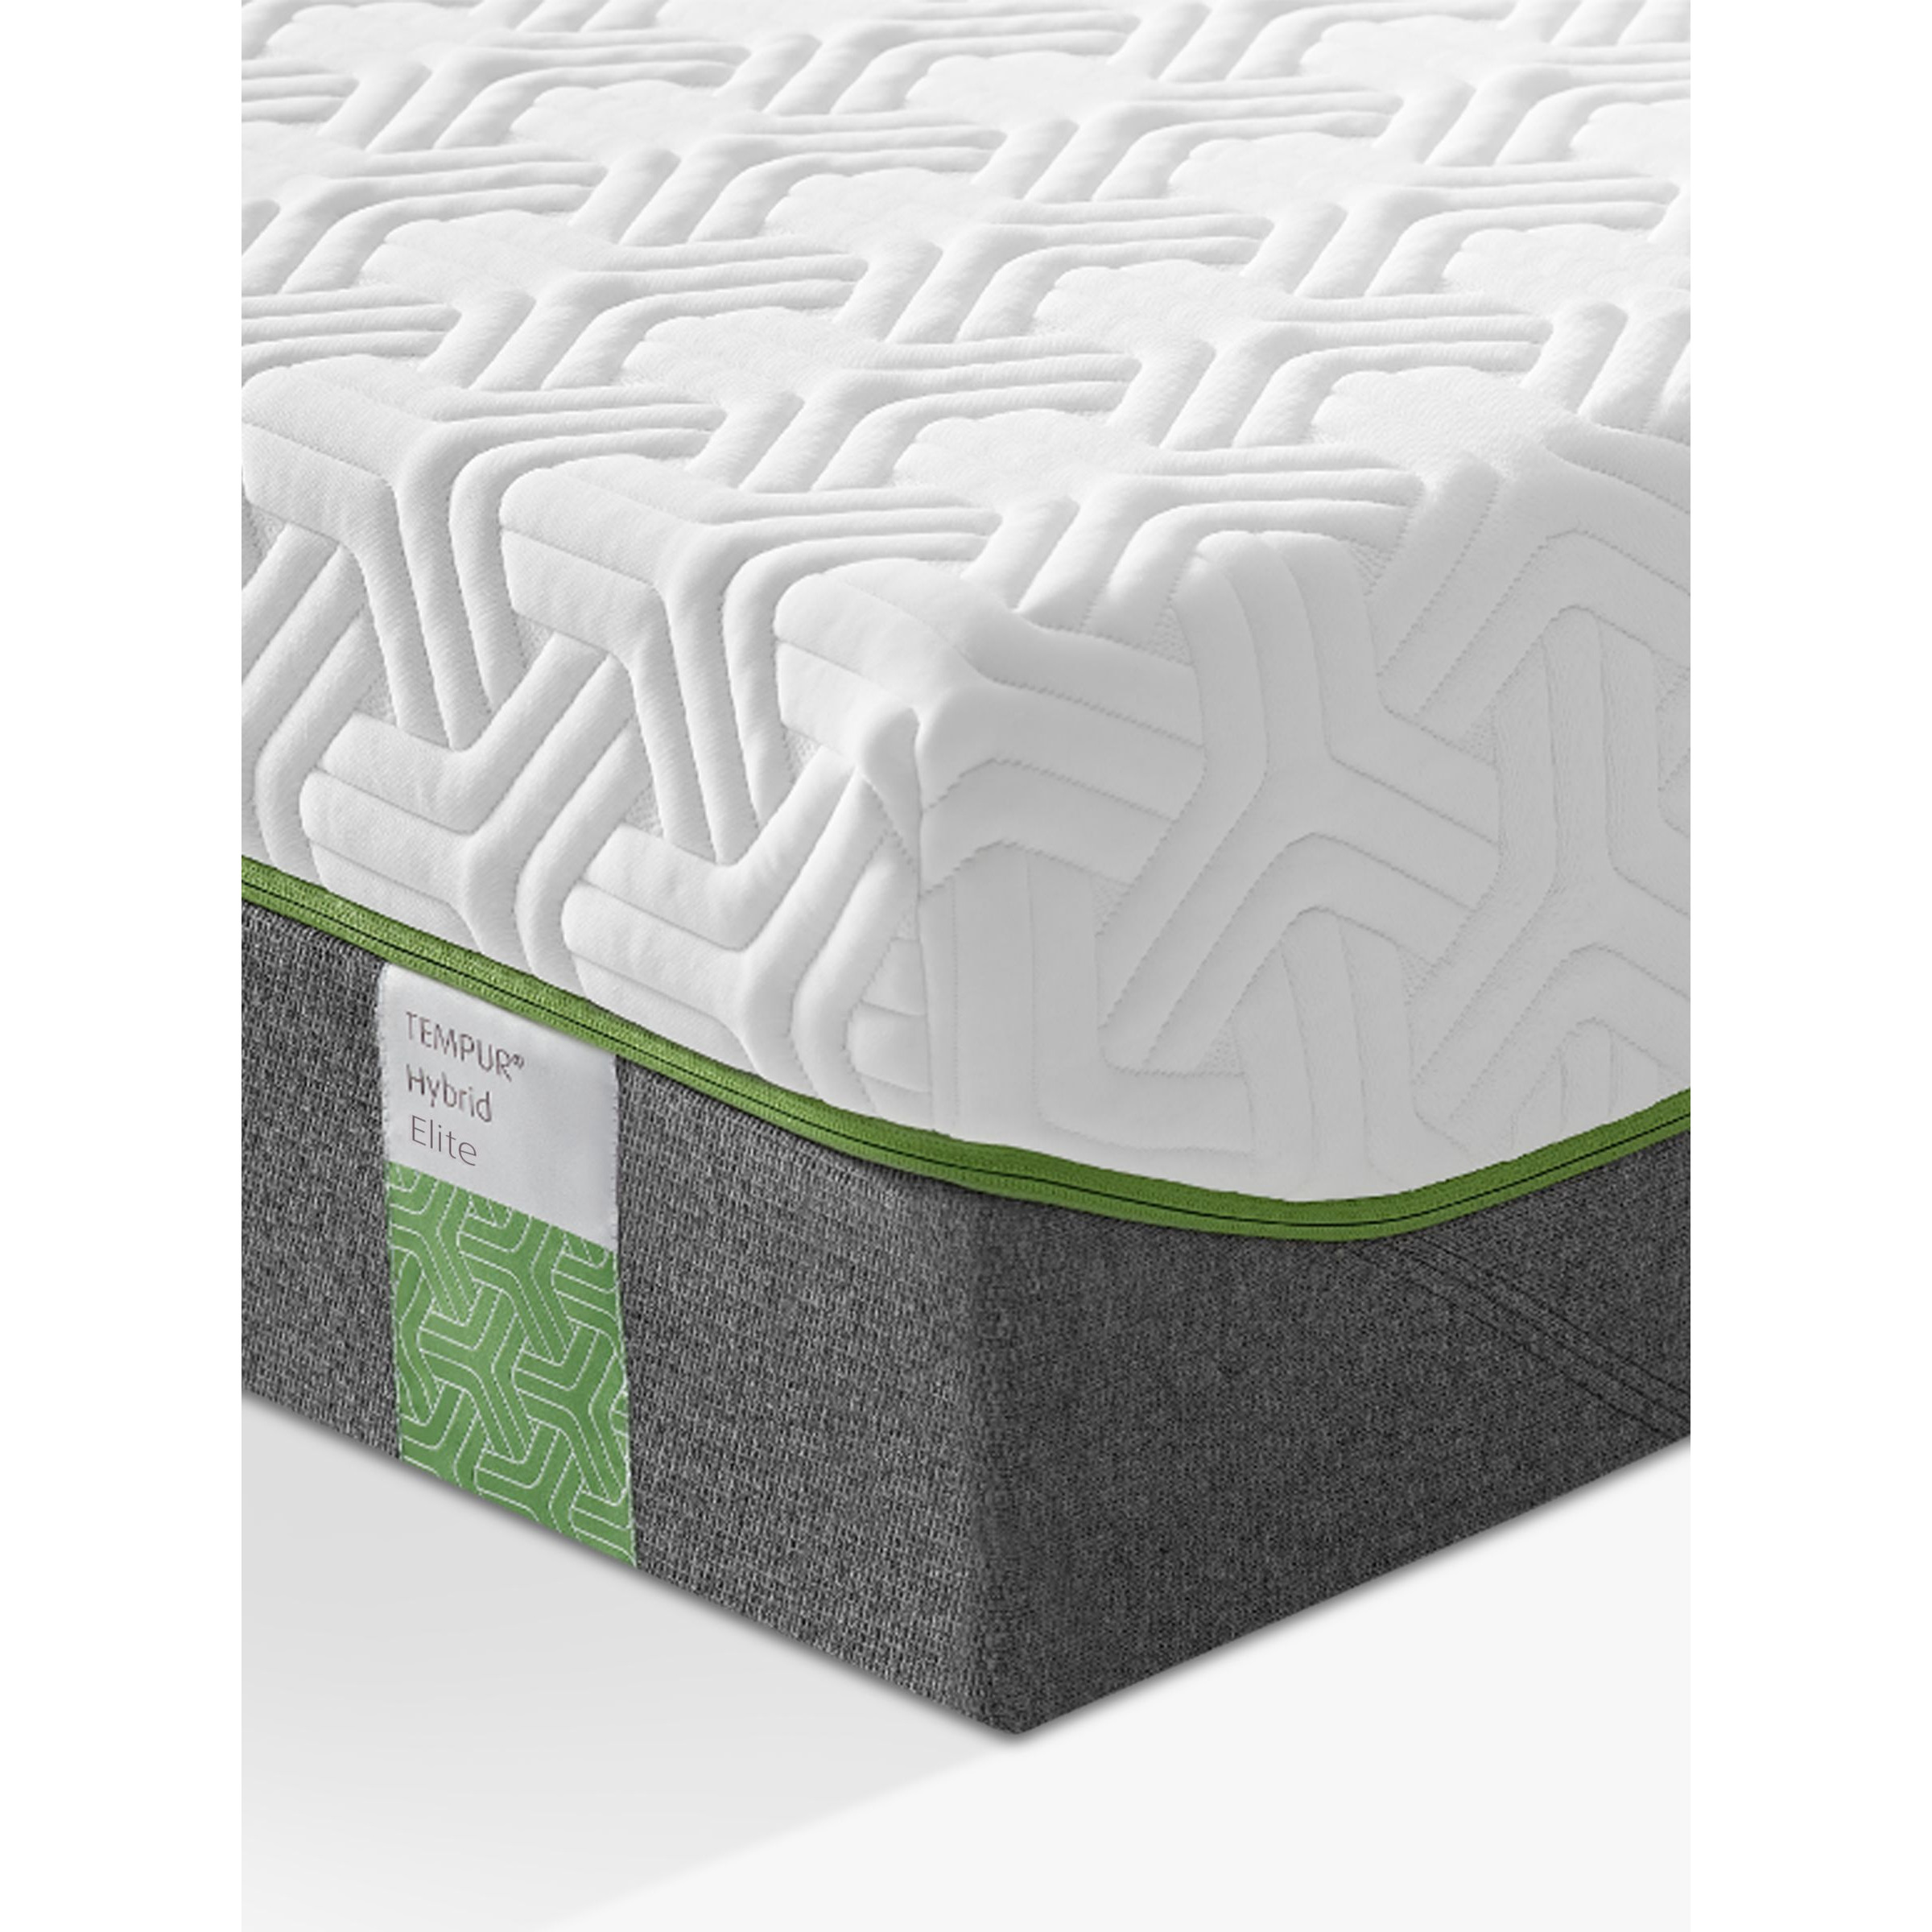 TEMPUR® Hybrid Elite Pocket Spring Memory Foam Mattress, Medium, Super King Size - image 1